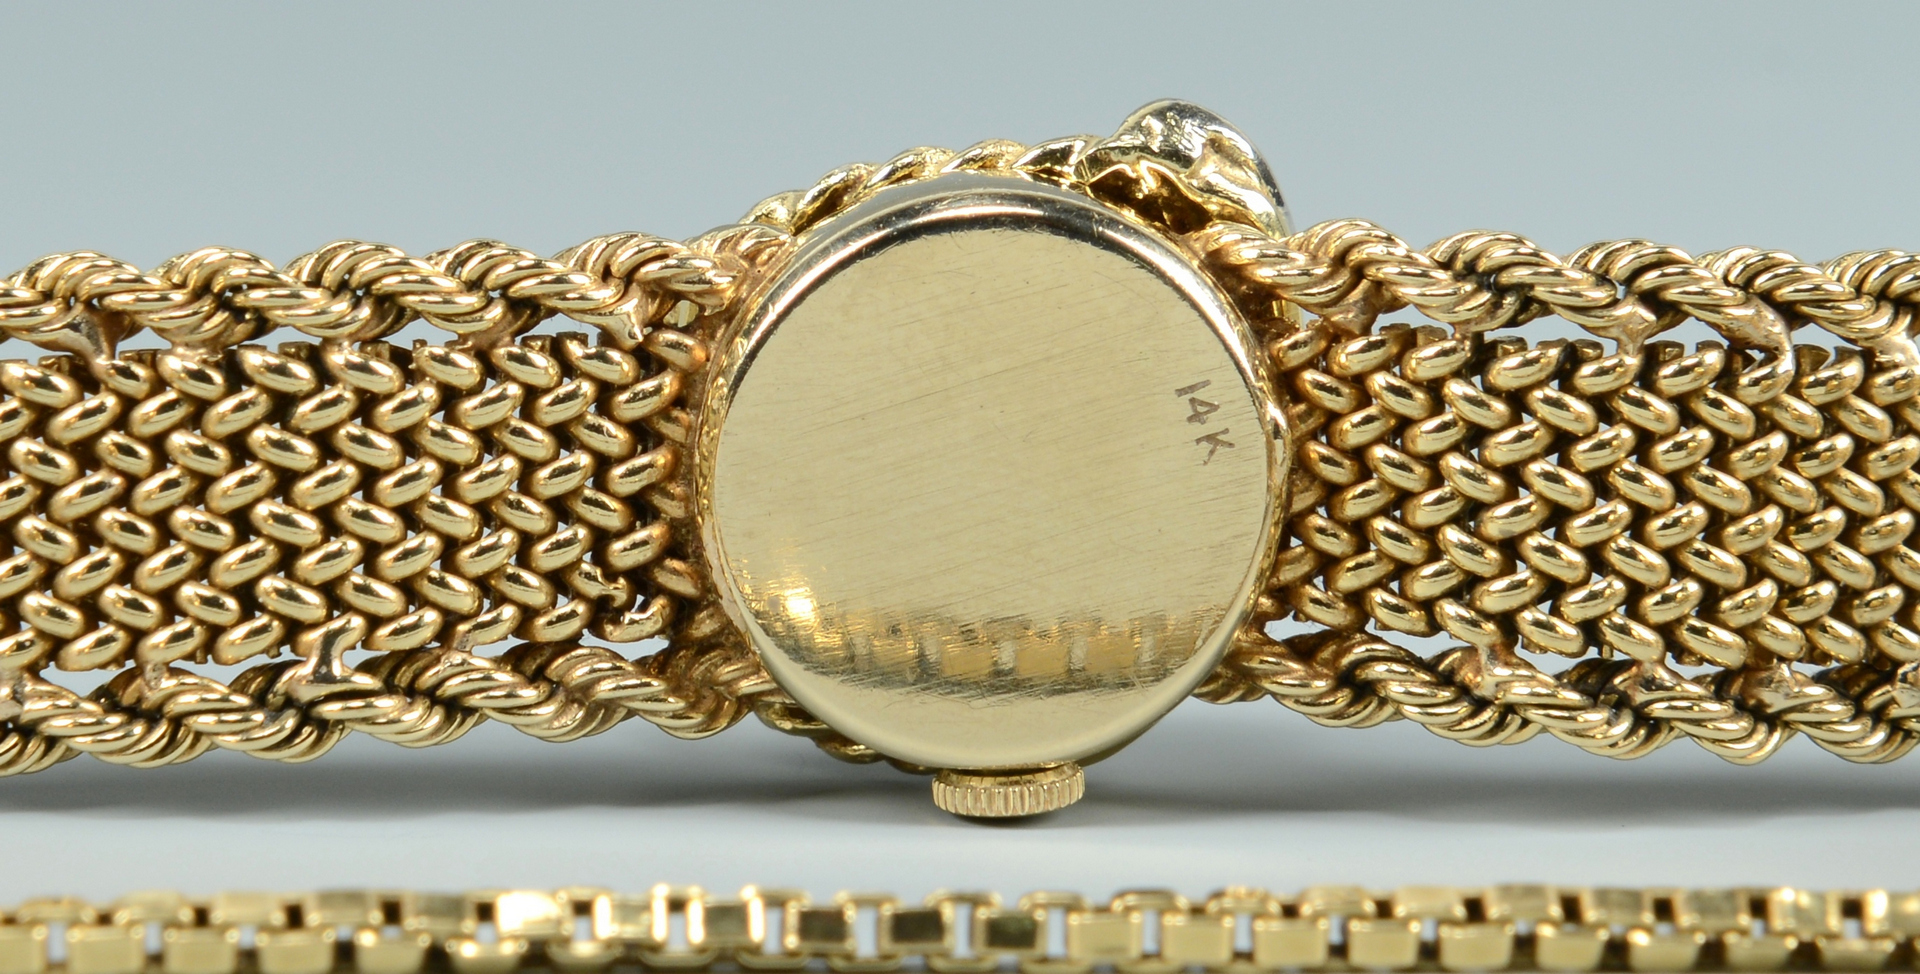 Lot 3088068: 14k Lady's Luva Bracelet Watch w/ Covered Dial